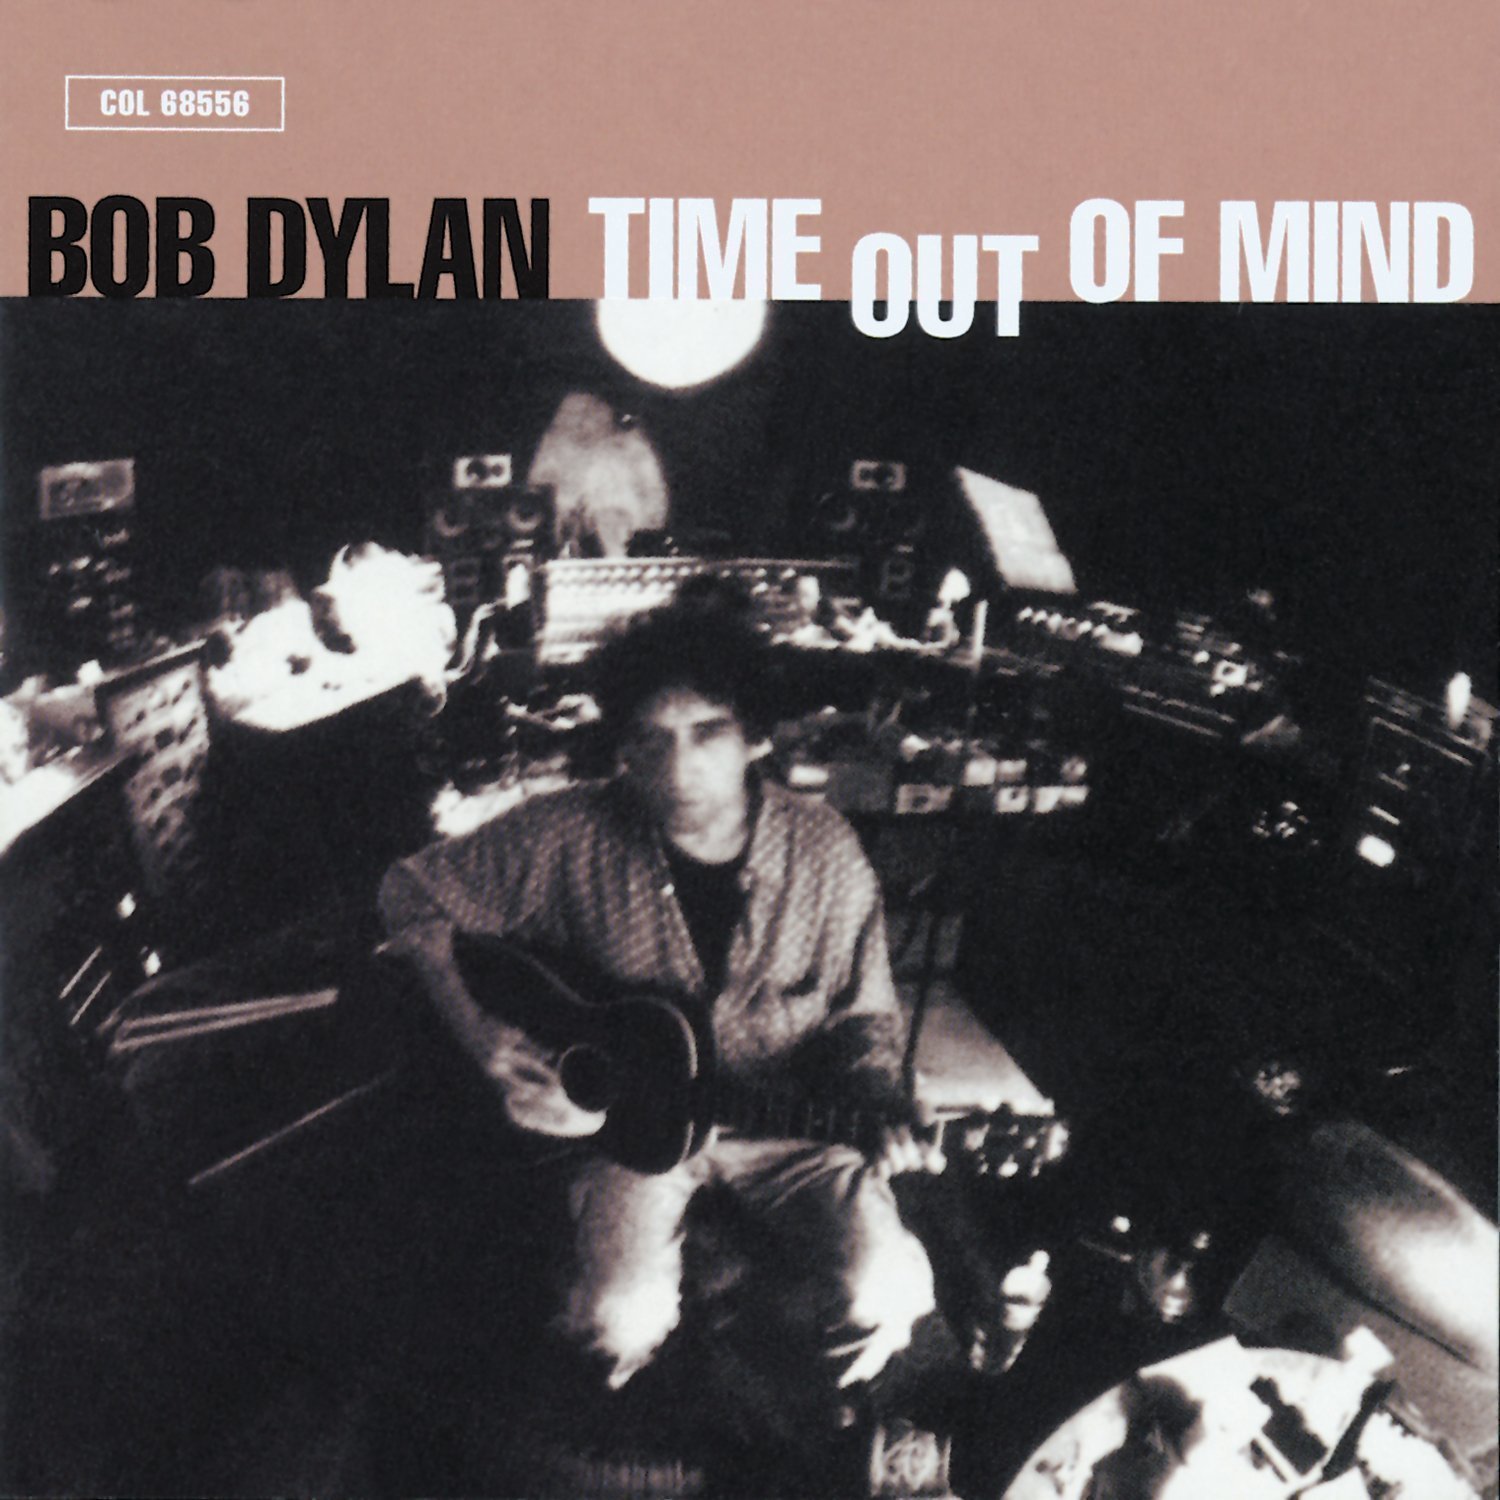 Vinyl Record Bob Dylan Time Out of Mind (2 LP + 7'" Vinyl)